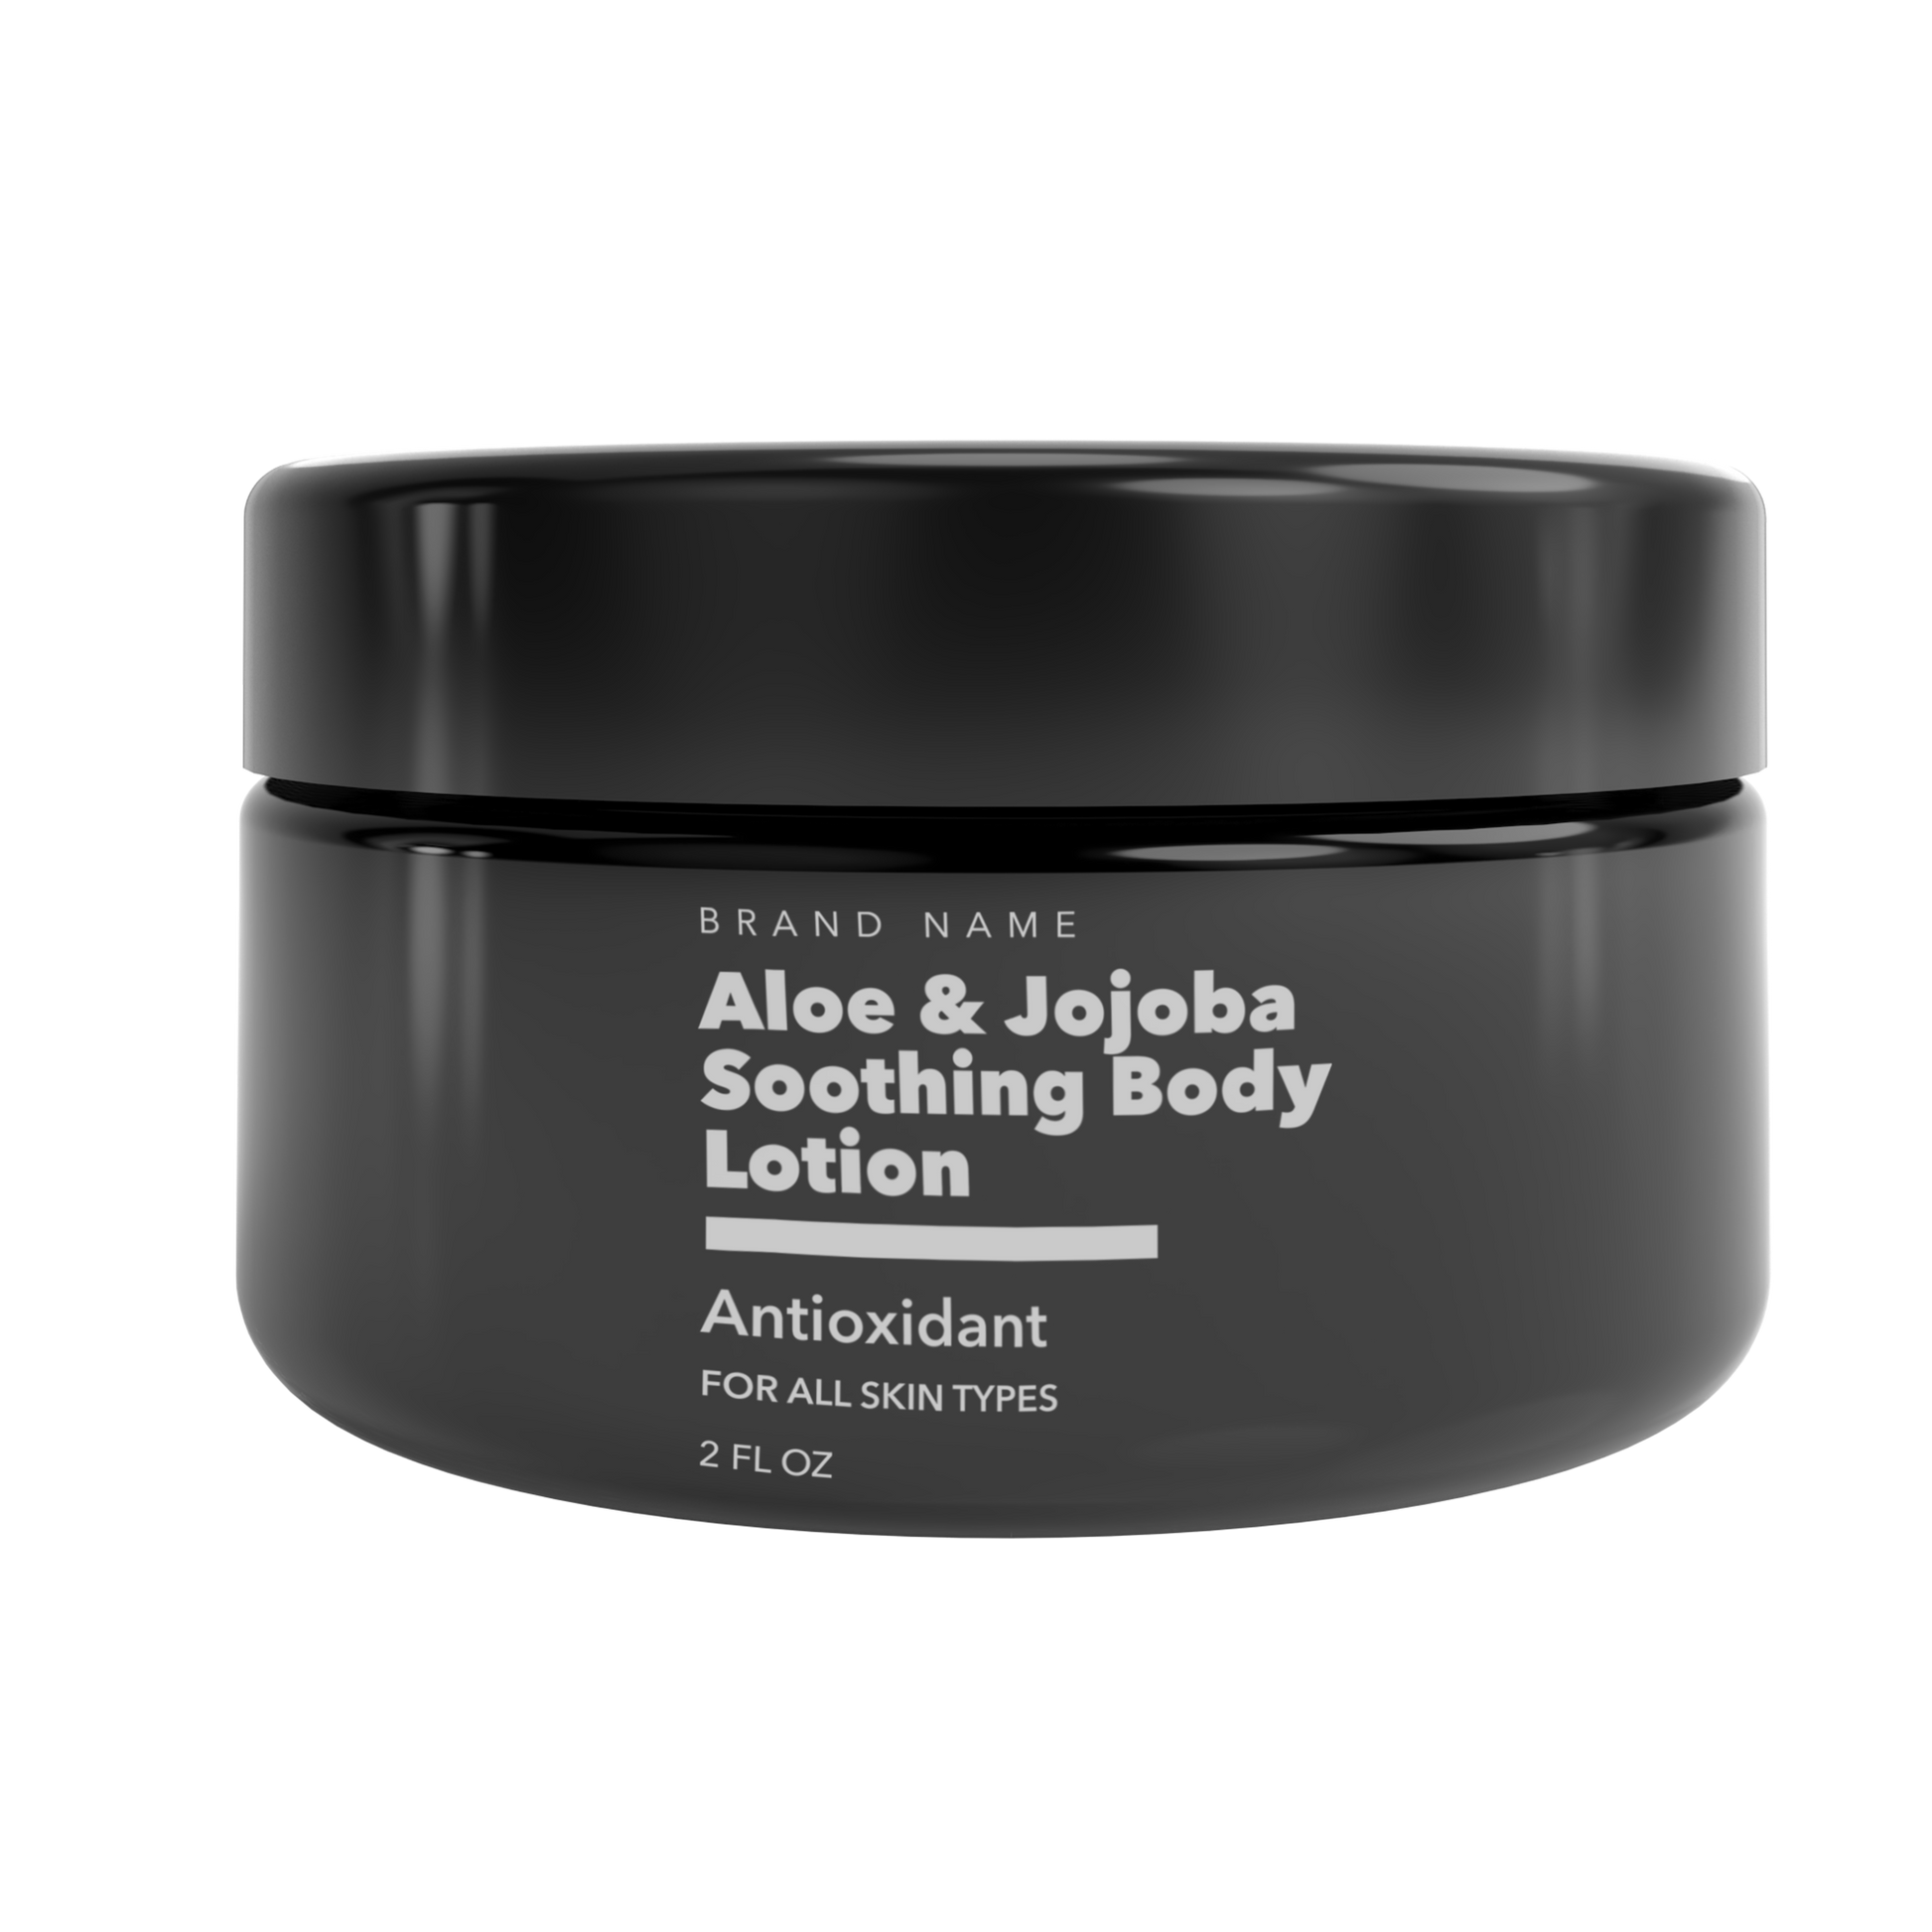 Aloe & Jojoba Soothing Body Lotion